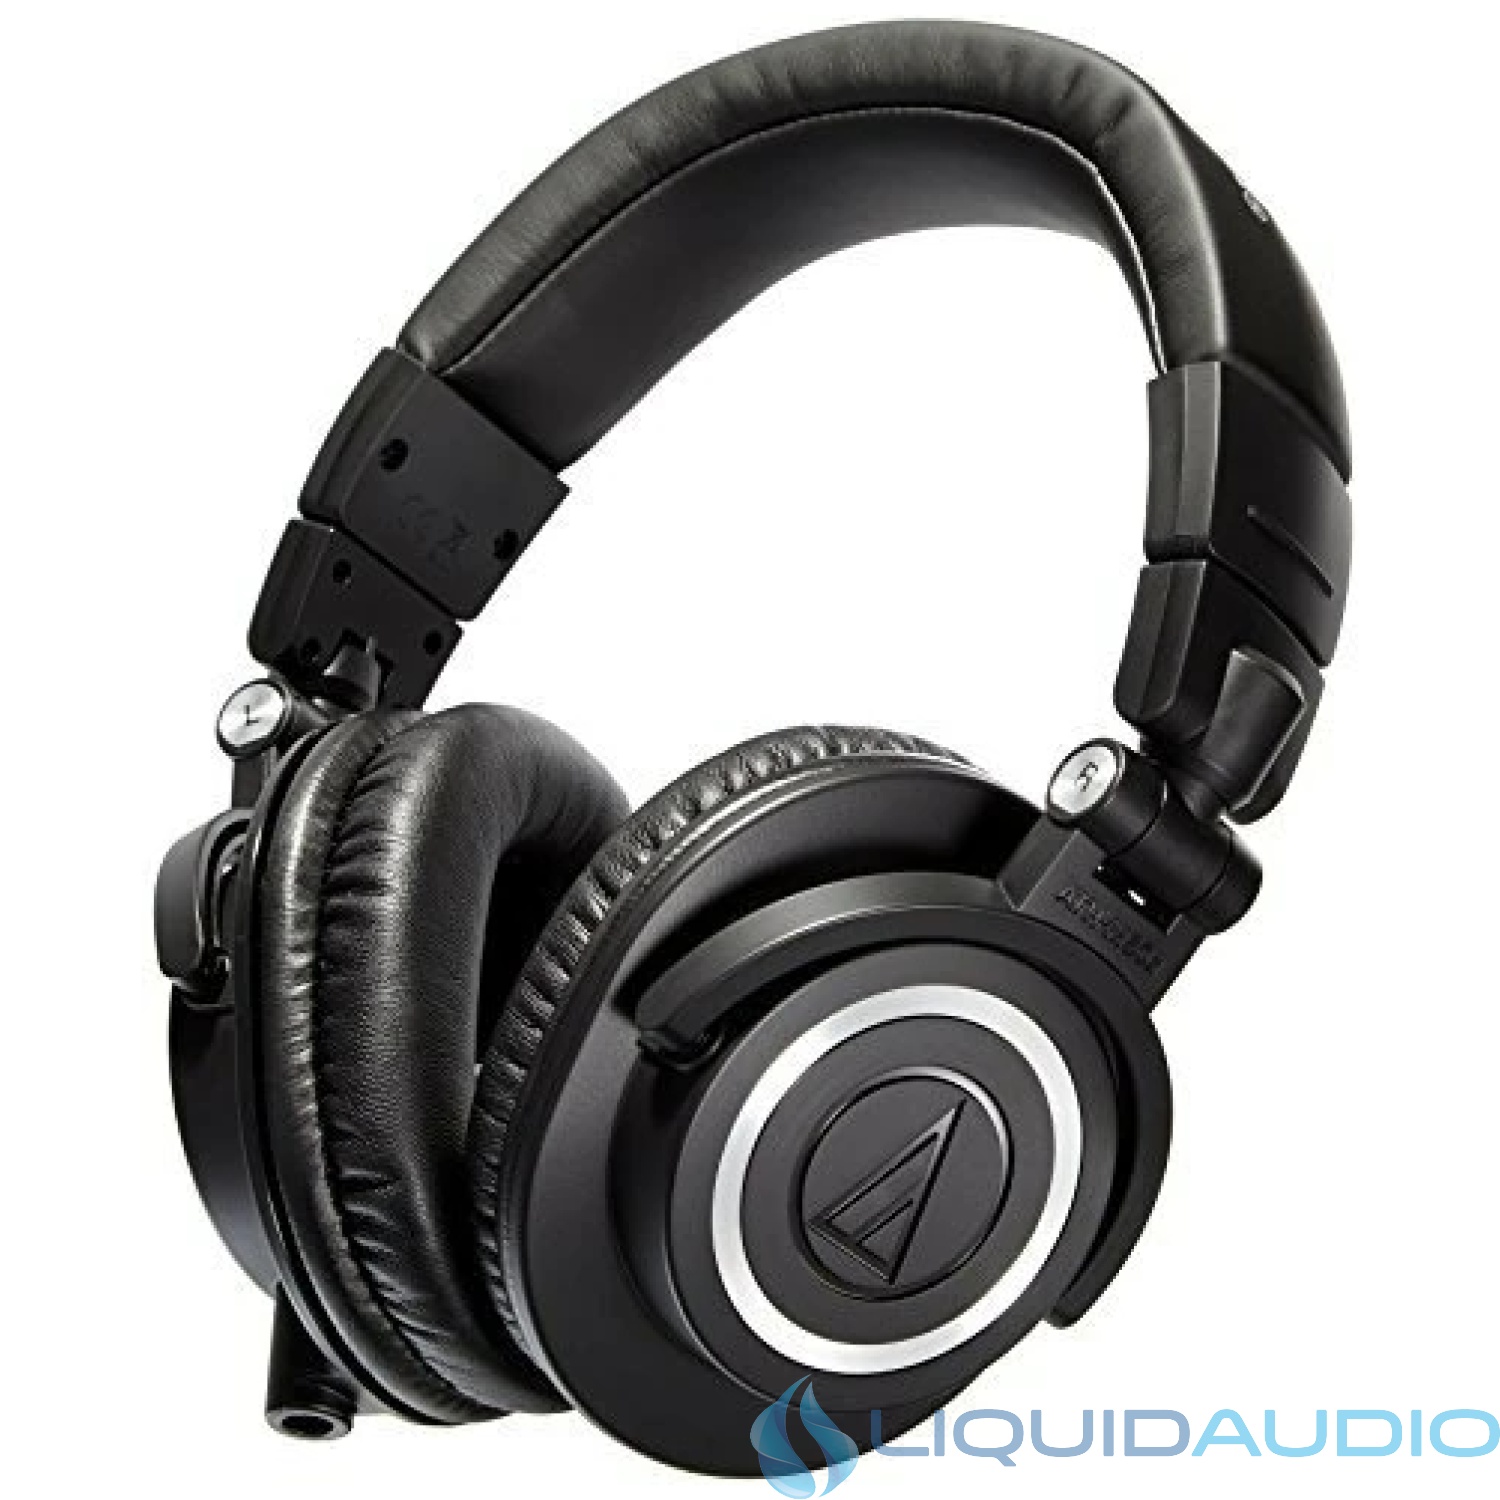 Audio-technica ATH-M50x WH White professional monitor headphones